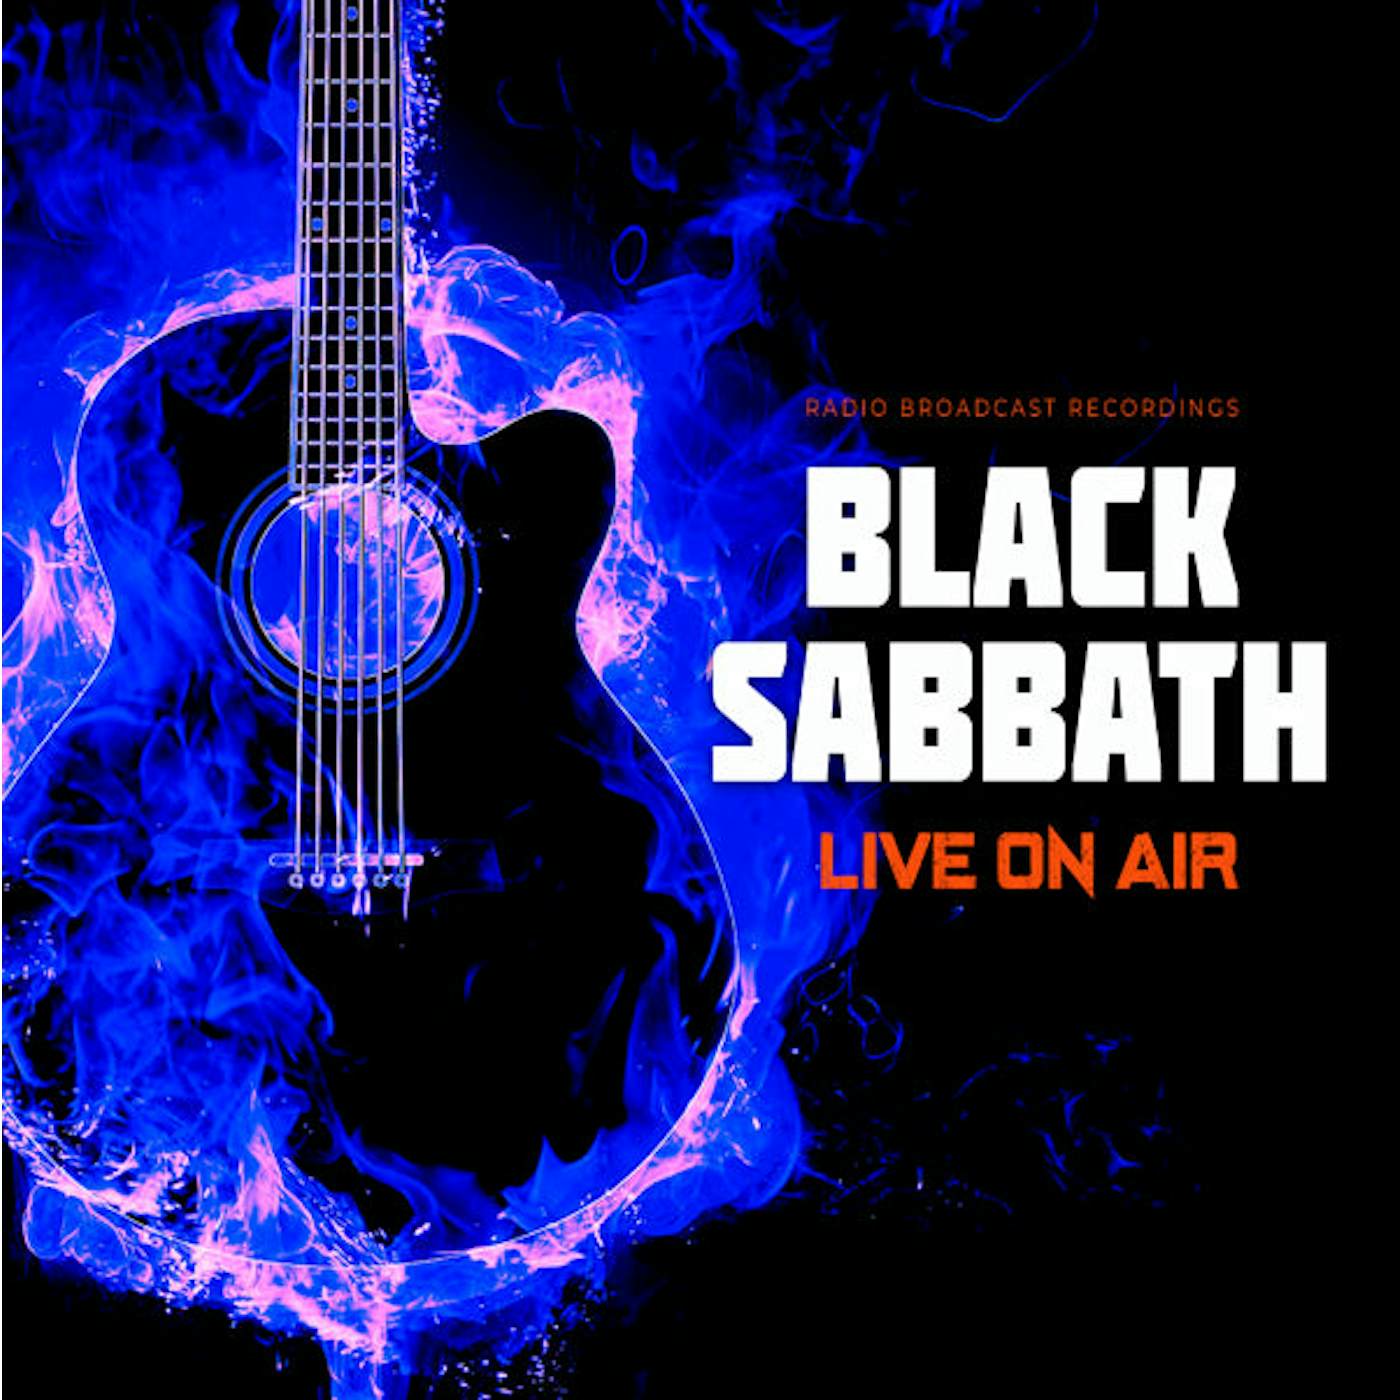 Black Sabbath LP - Live On Air (Vinyl)